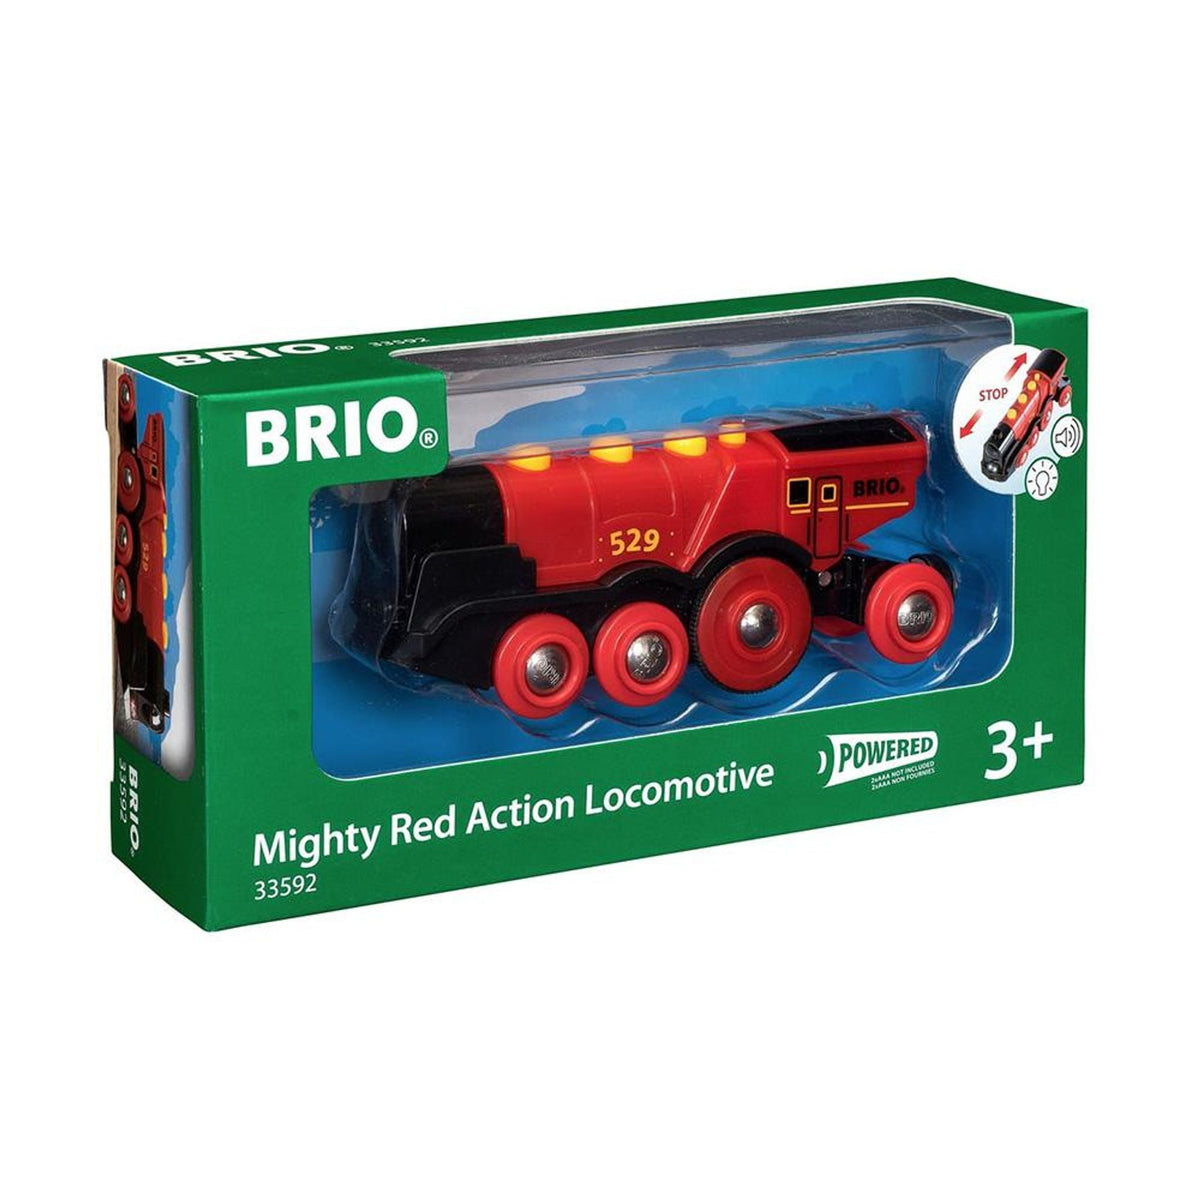 BRIO BO - Mighty Red Action Locomotive - Toybox Tales